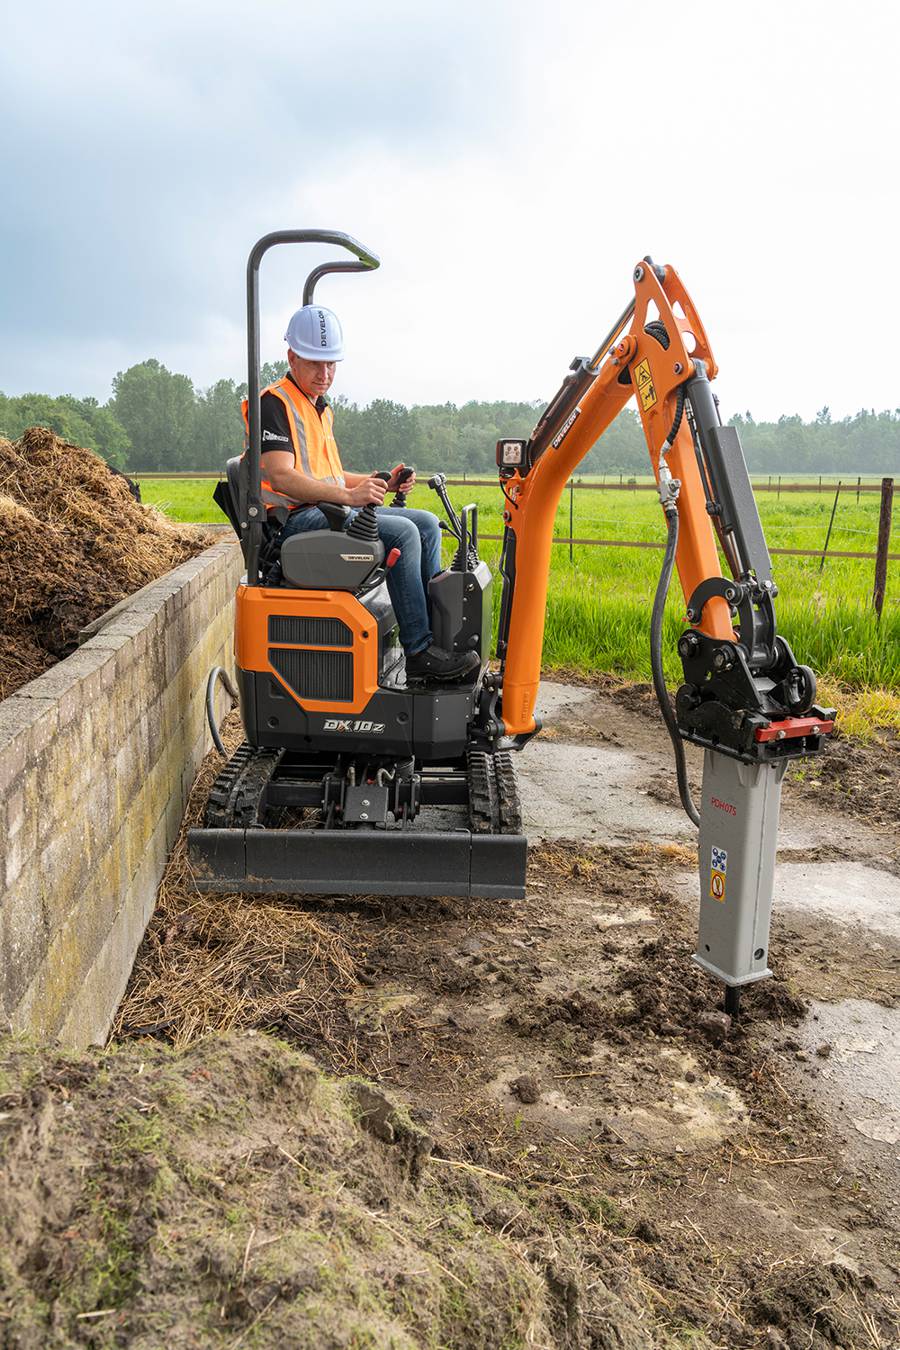 Develon releases High Performance DX10Z-7 Mini-Excavator